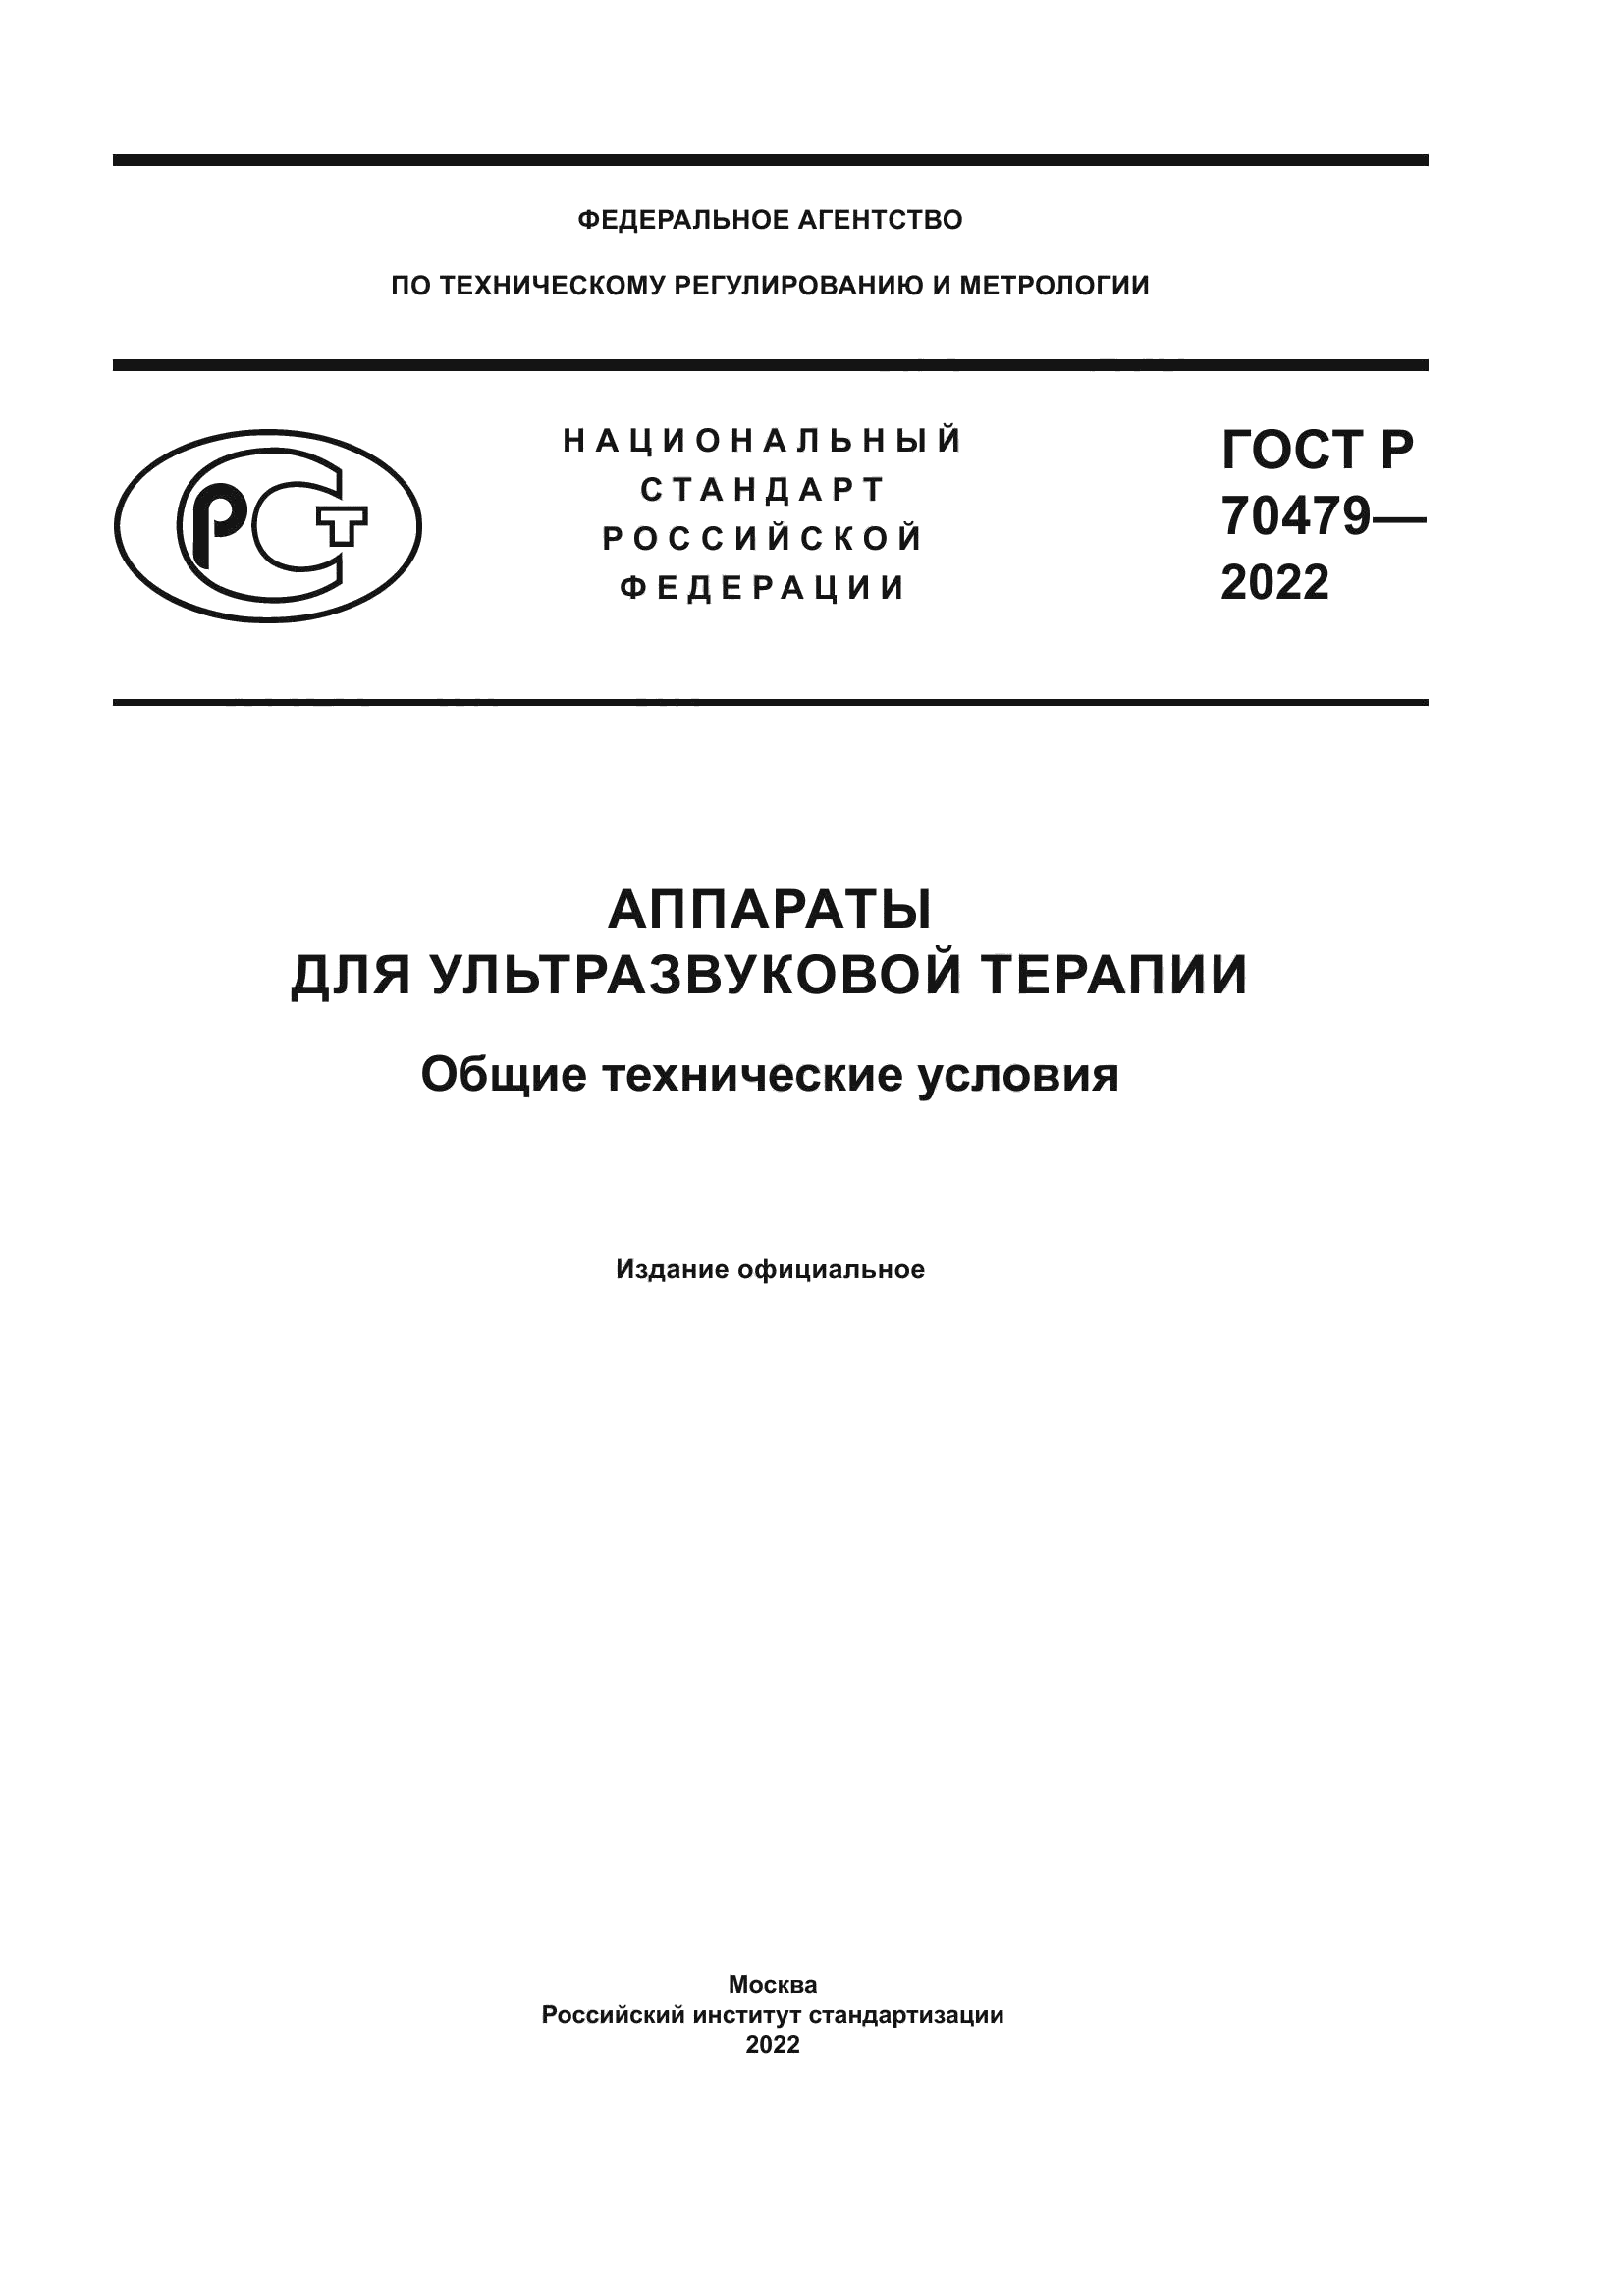 ГОСТ Р 70479-2022